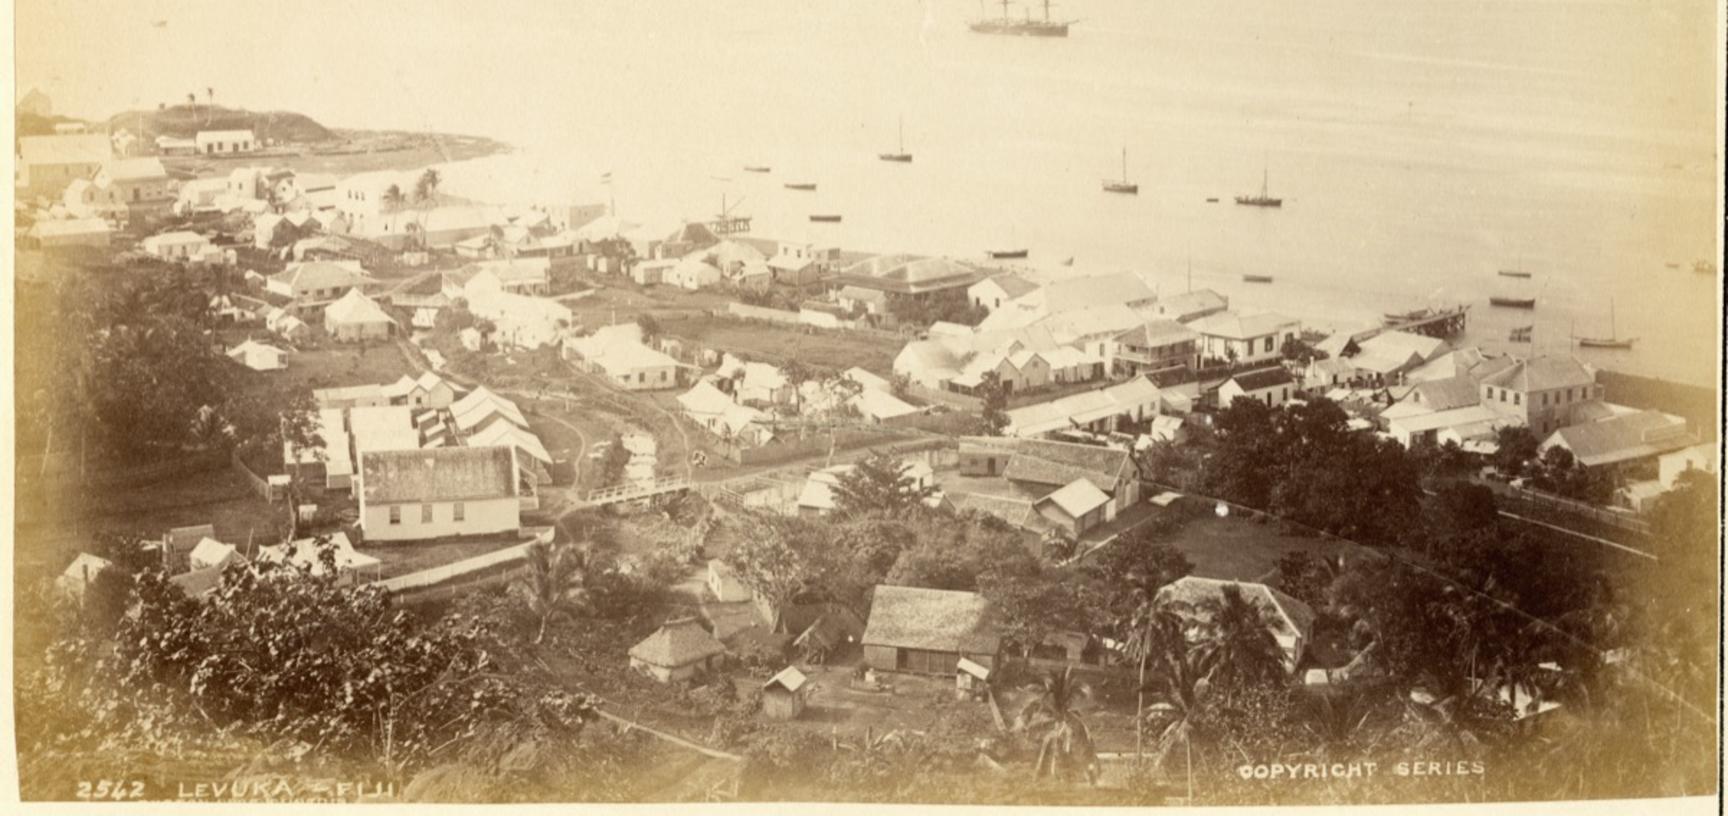 View of the former capital of Levuka on the Fijian island of Ovalau, ‘taken from the hills above the Hospital’. Photograph by Alfred Burton for the Burton Brothers studio (Dunedin). Levuka, Ovalau, Fiji. 14 July 1884.